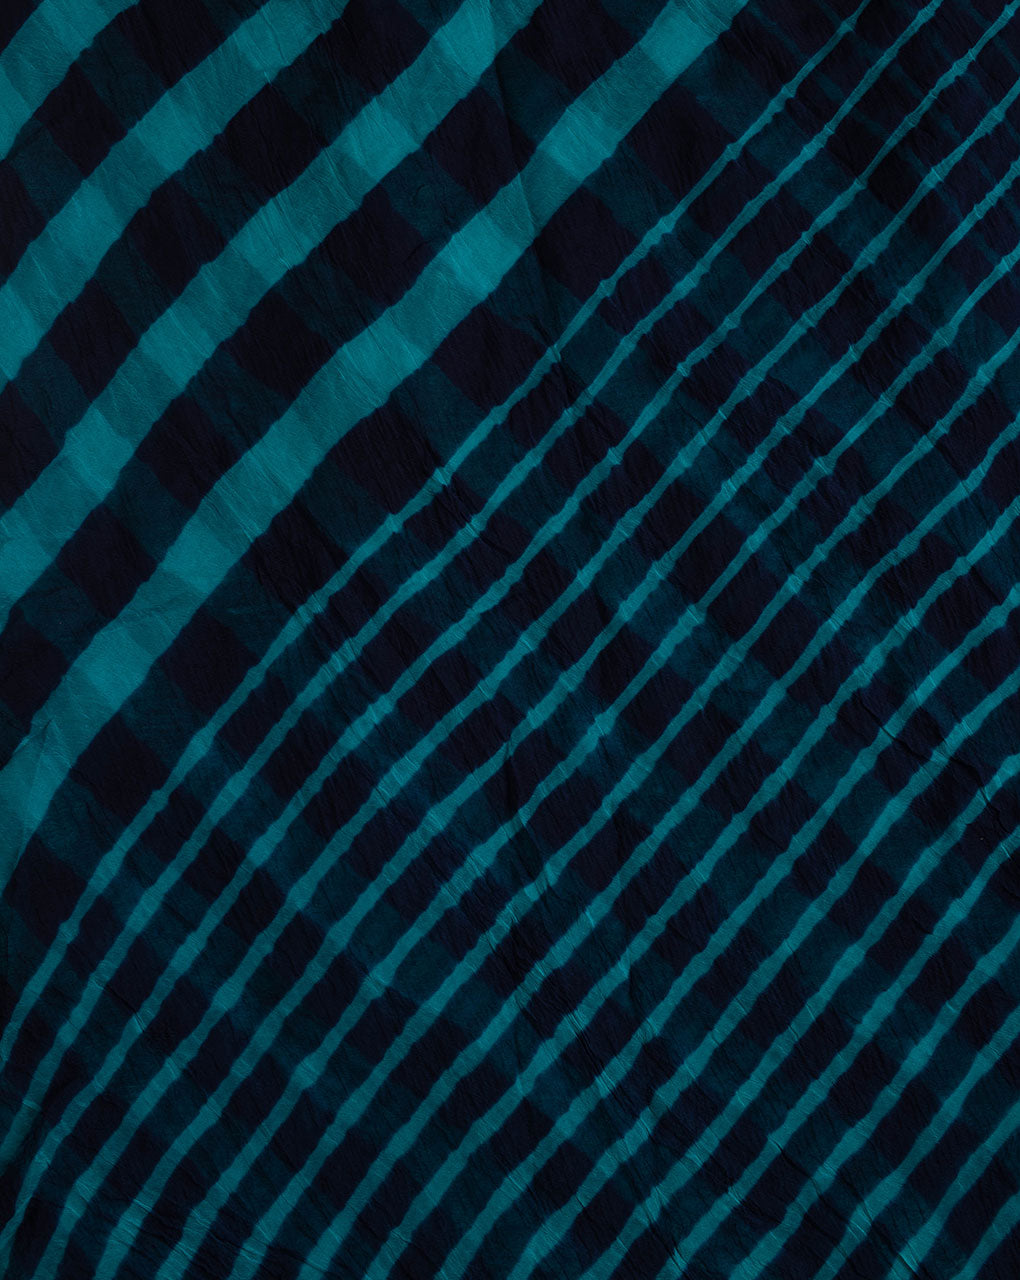 Leheriya Tie & Dye Viscose Chiffon Fabric - Fabriclore.com